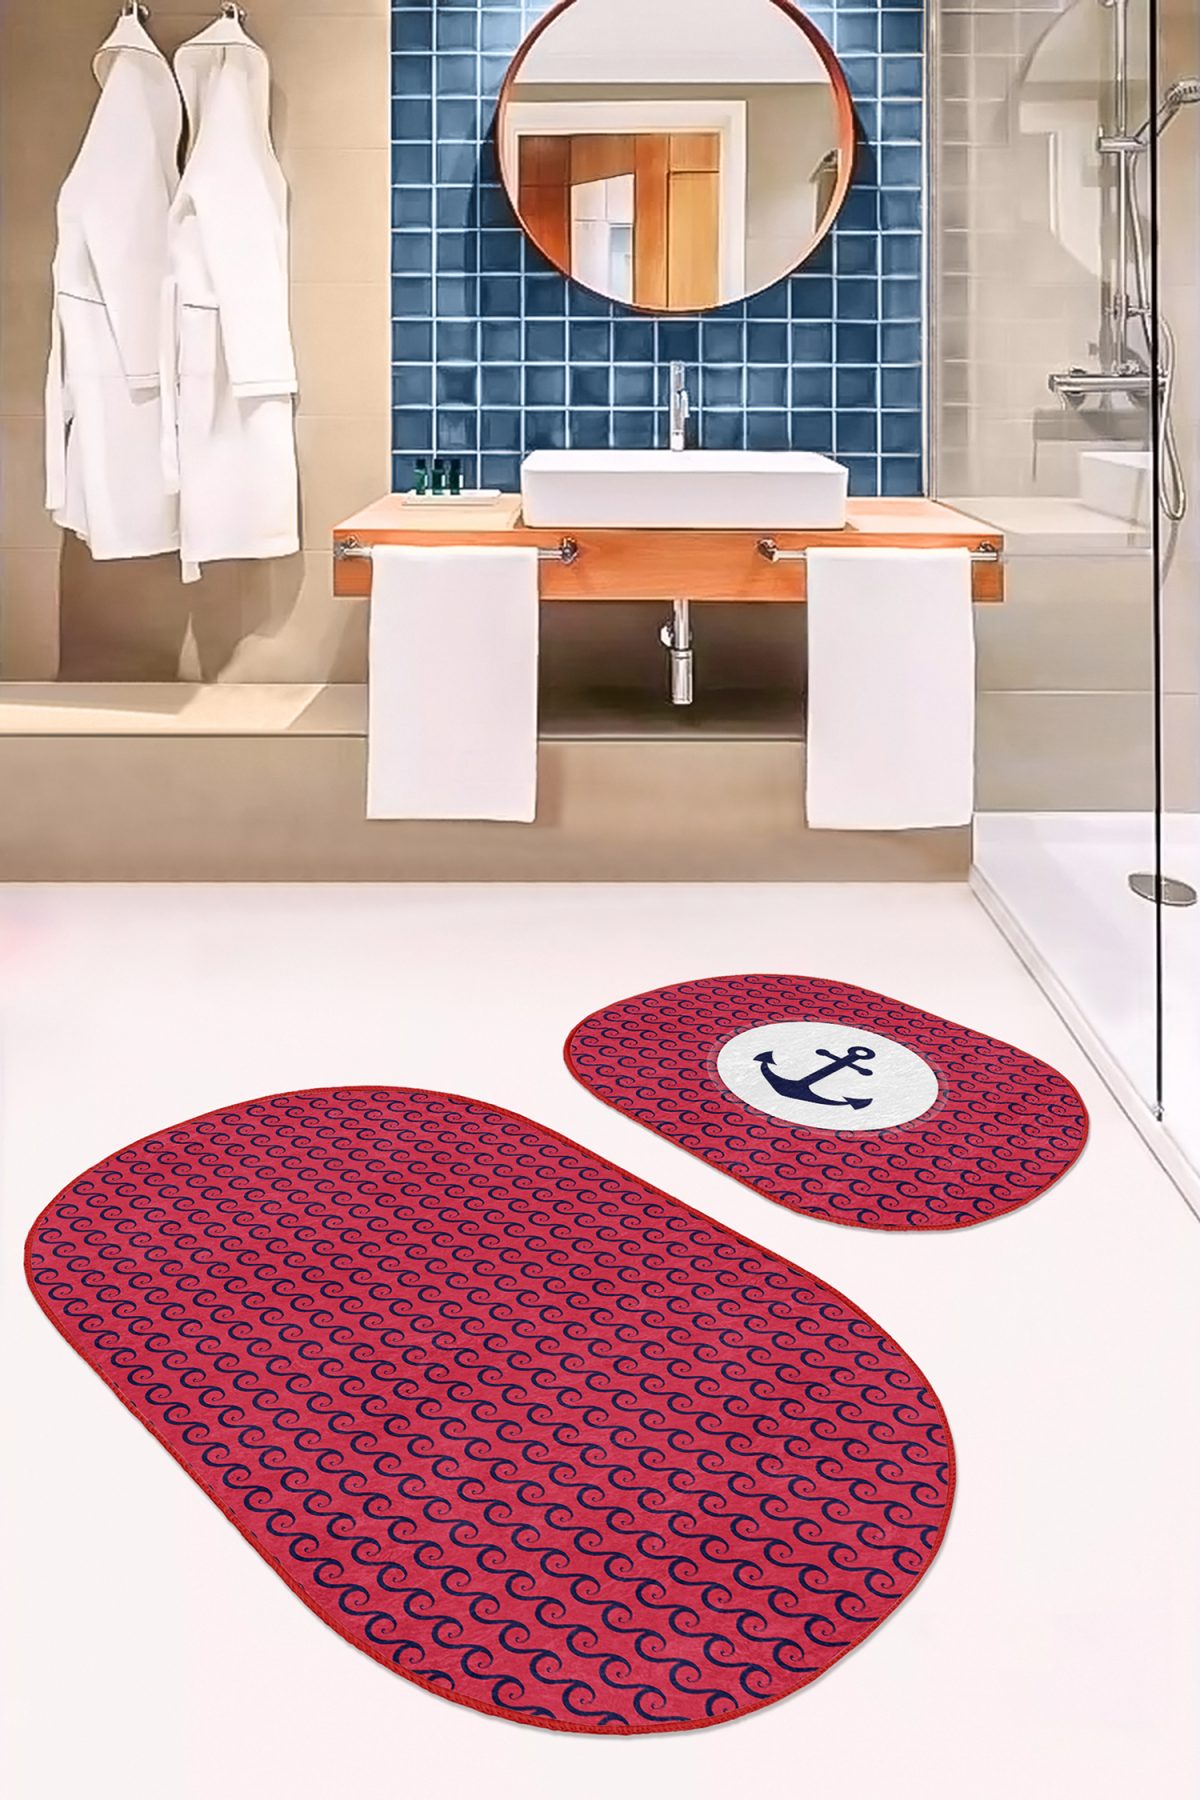 Bordo Zemin Lacivert Dalga Detaylı Özel Tasarım 2'li Oval Kaymaz Tabanlı Banyo & Mutfak Paspas Takımı Realhomes